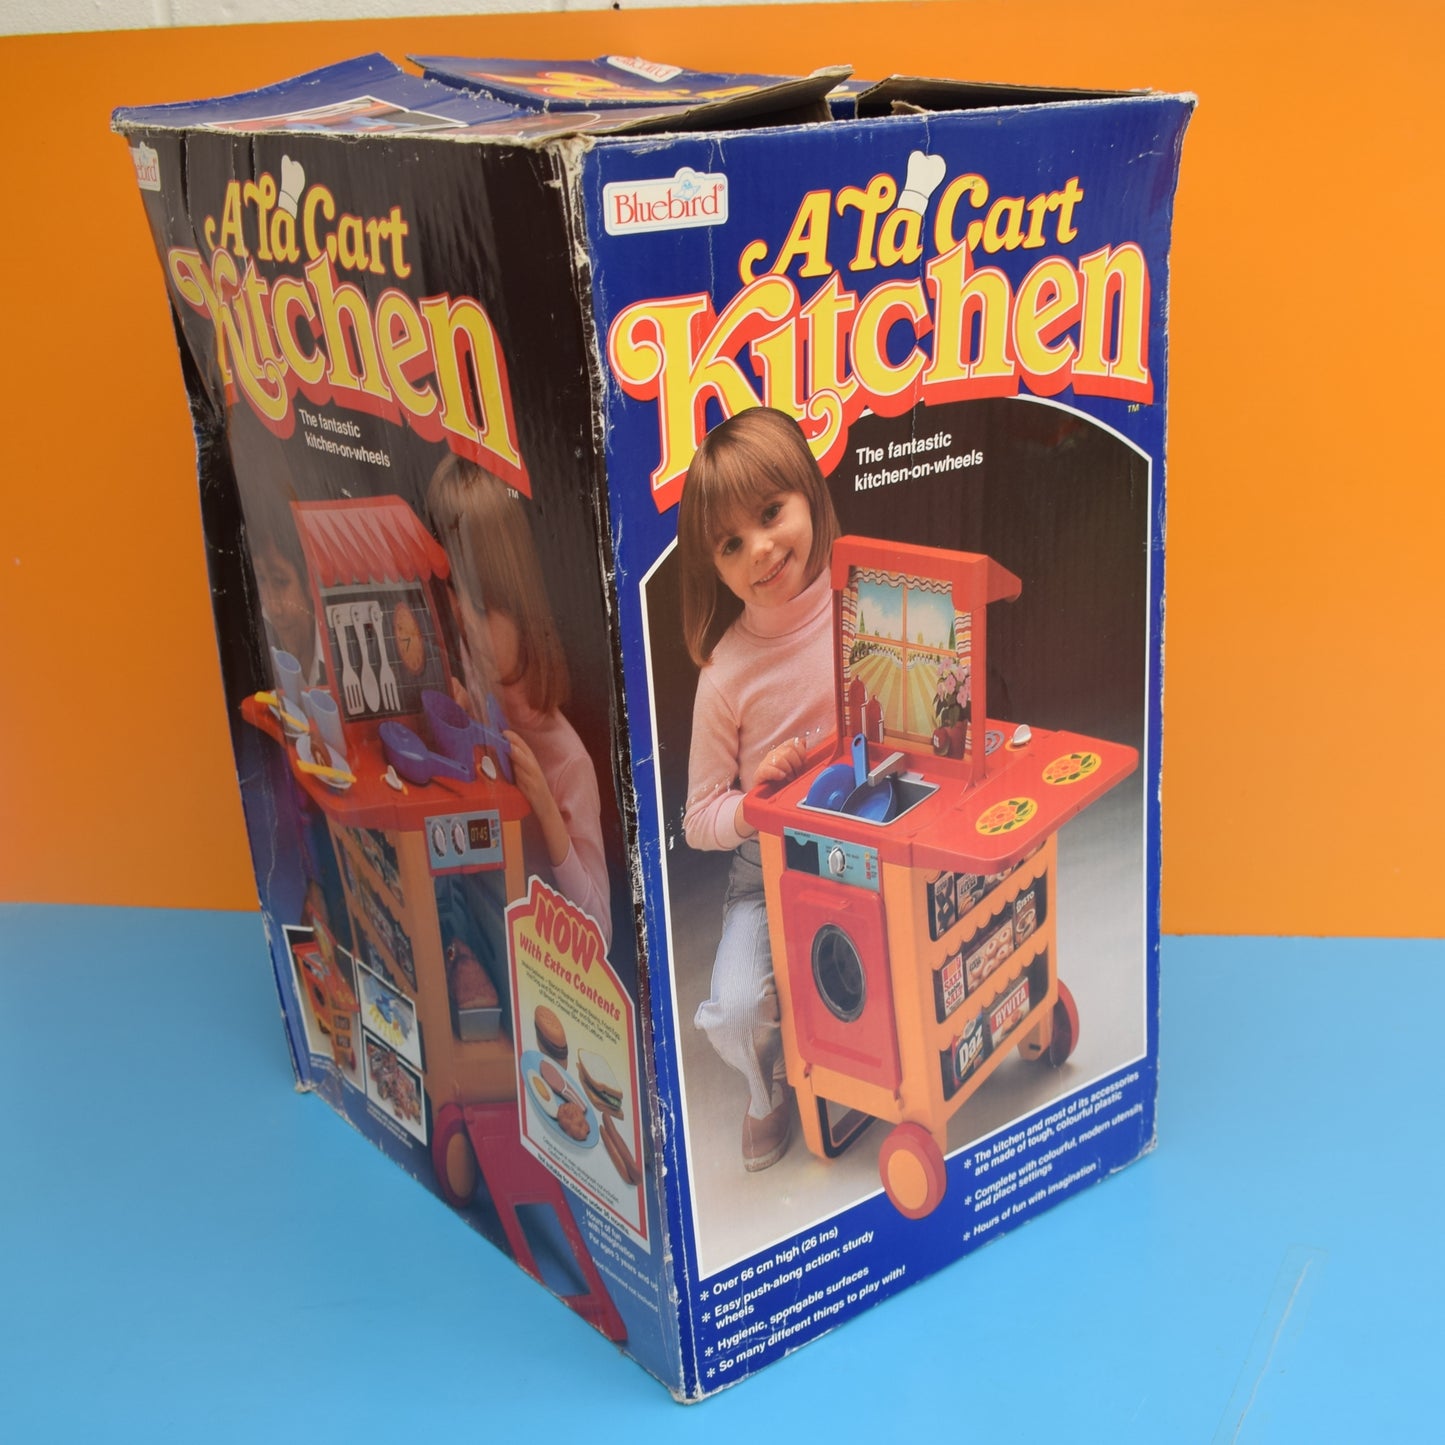 Vintage 1980s Blue Bird Al La Cart Kitchen